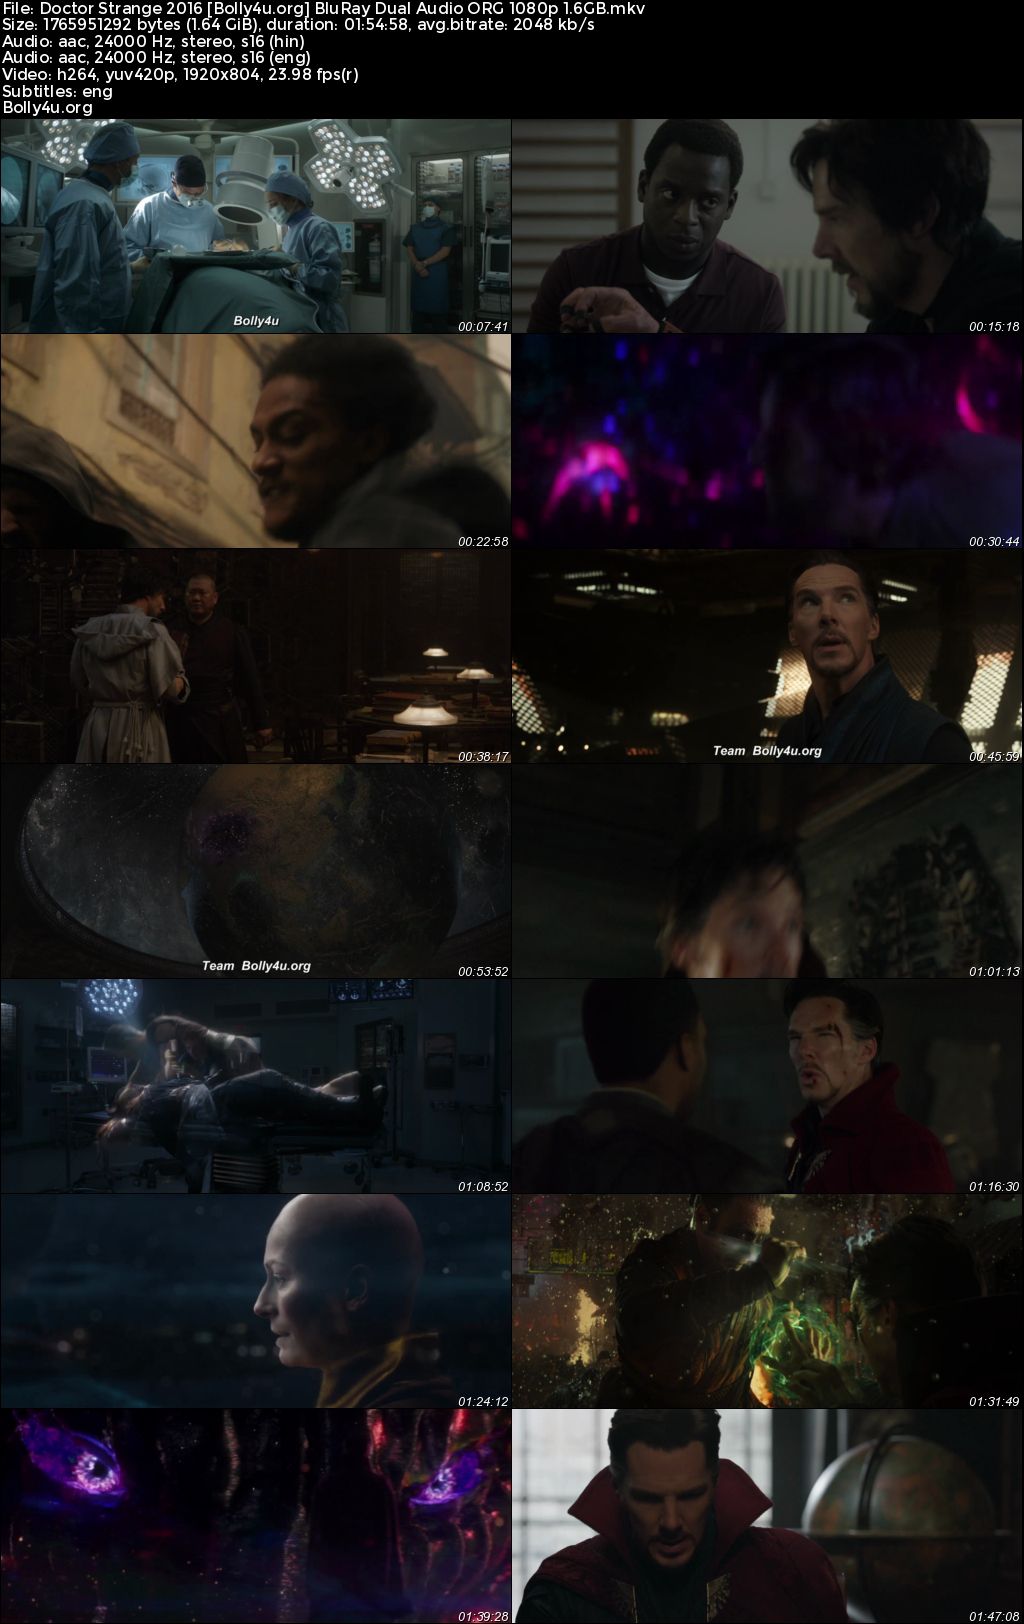 Doctor Strange 2016 BluRay Hindi Dual Audio ORG Full Movie Download 1080p 720p 480p